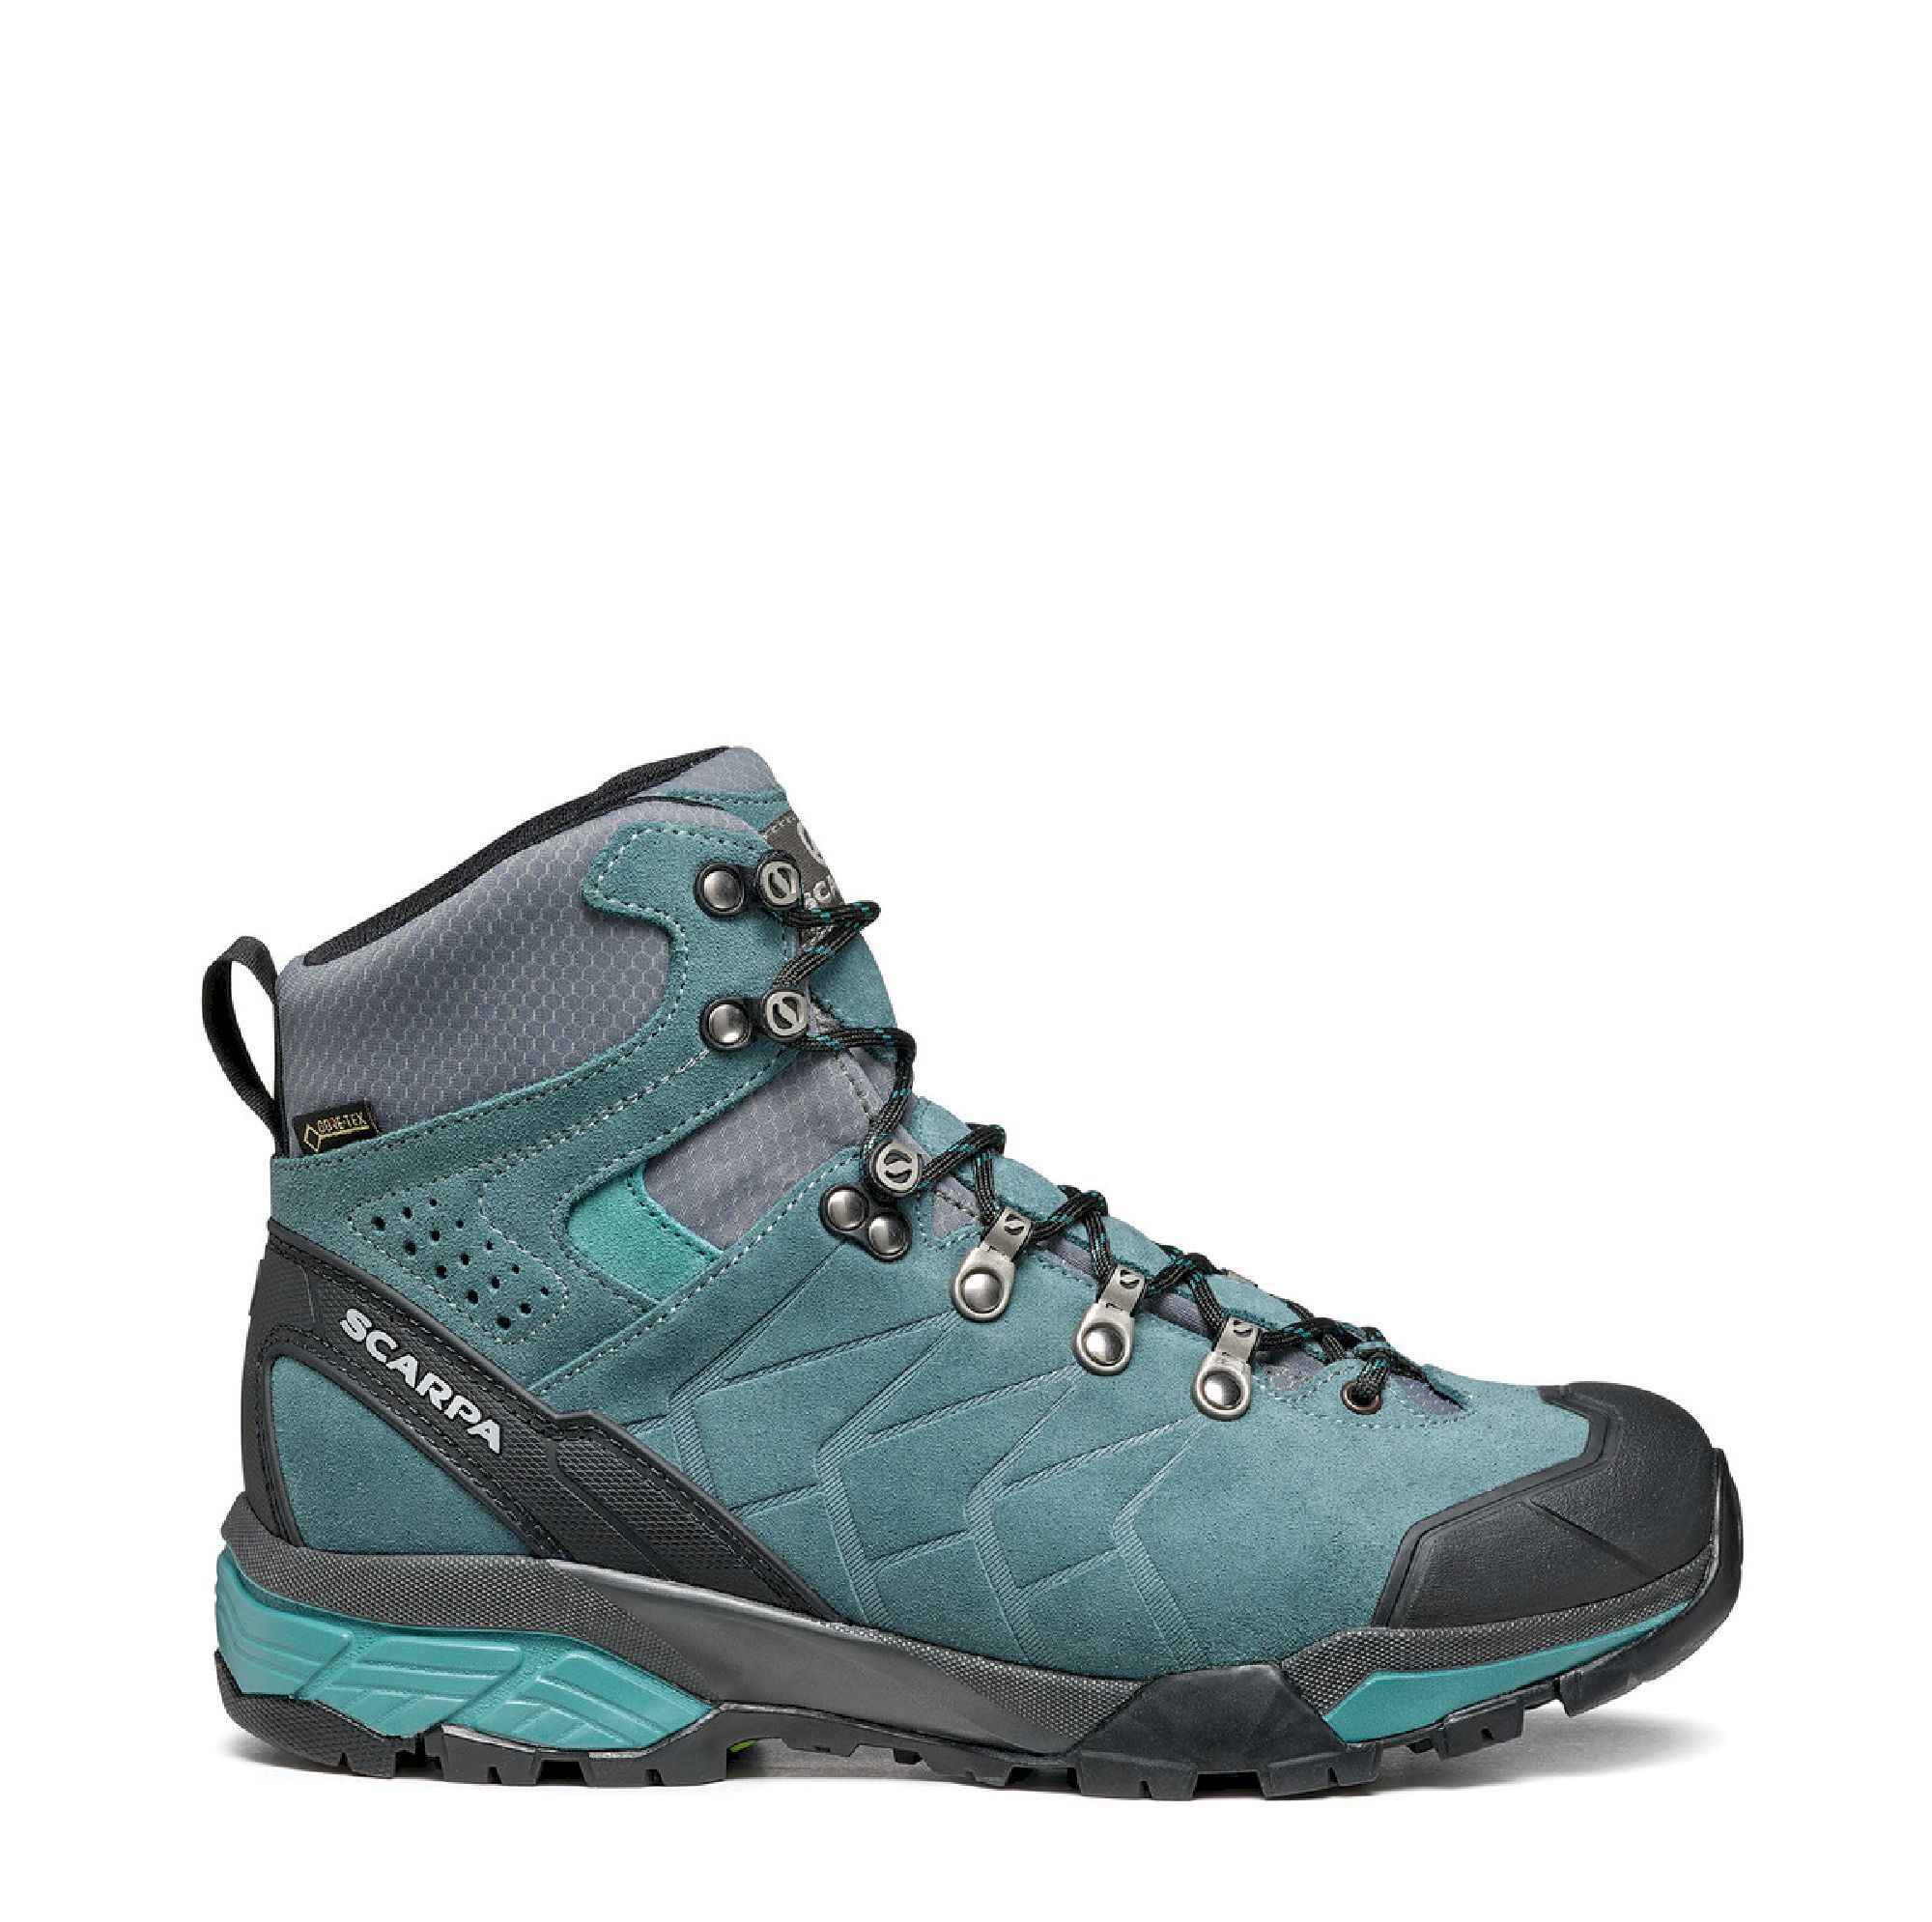 Scarpa - ZG Trek GTX Wmn - Hiking Boots - Women's